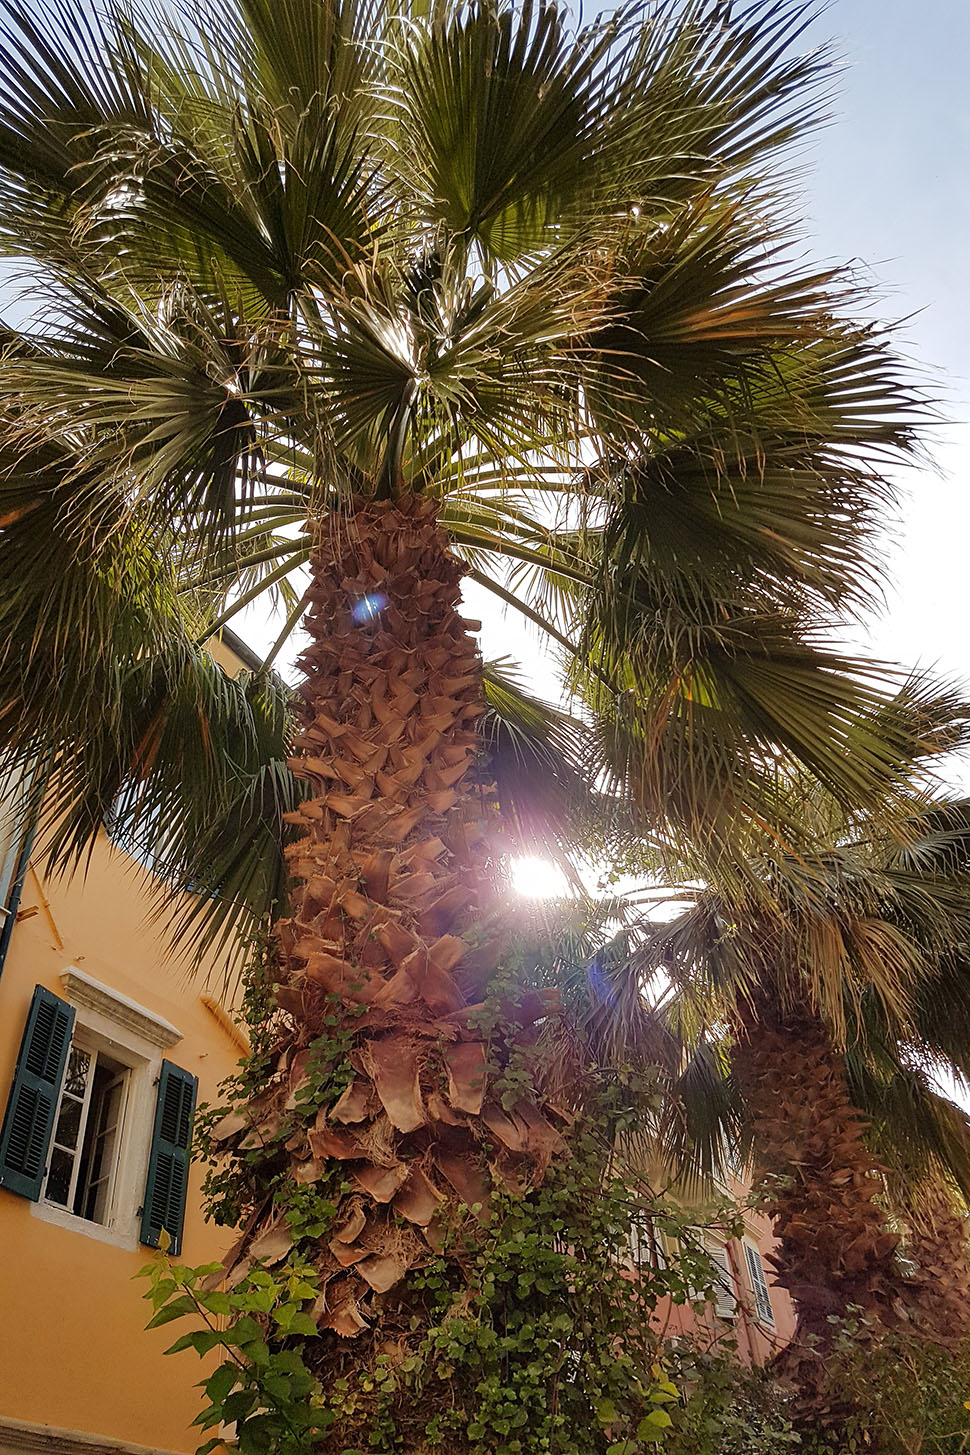 10 Tropical Activities To Do In Corfu by Tamara Bellis